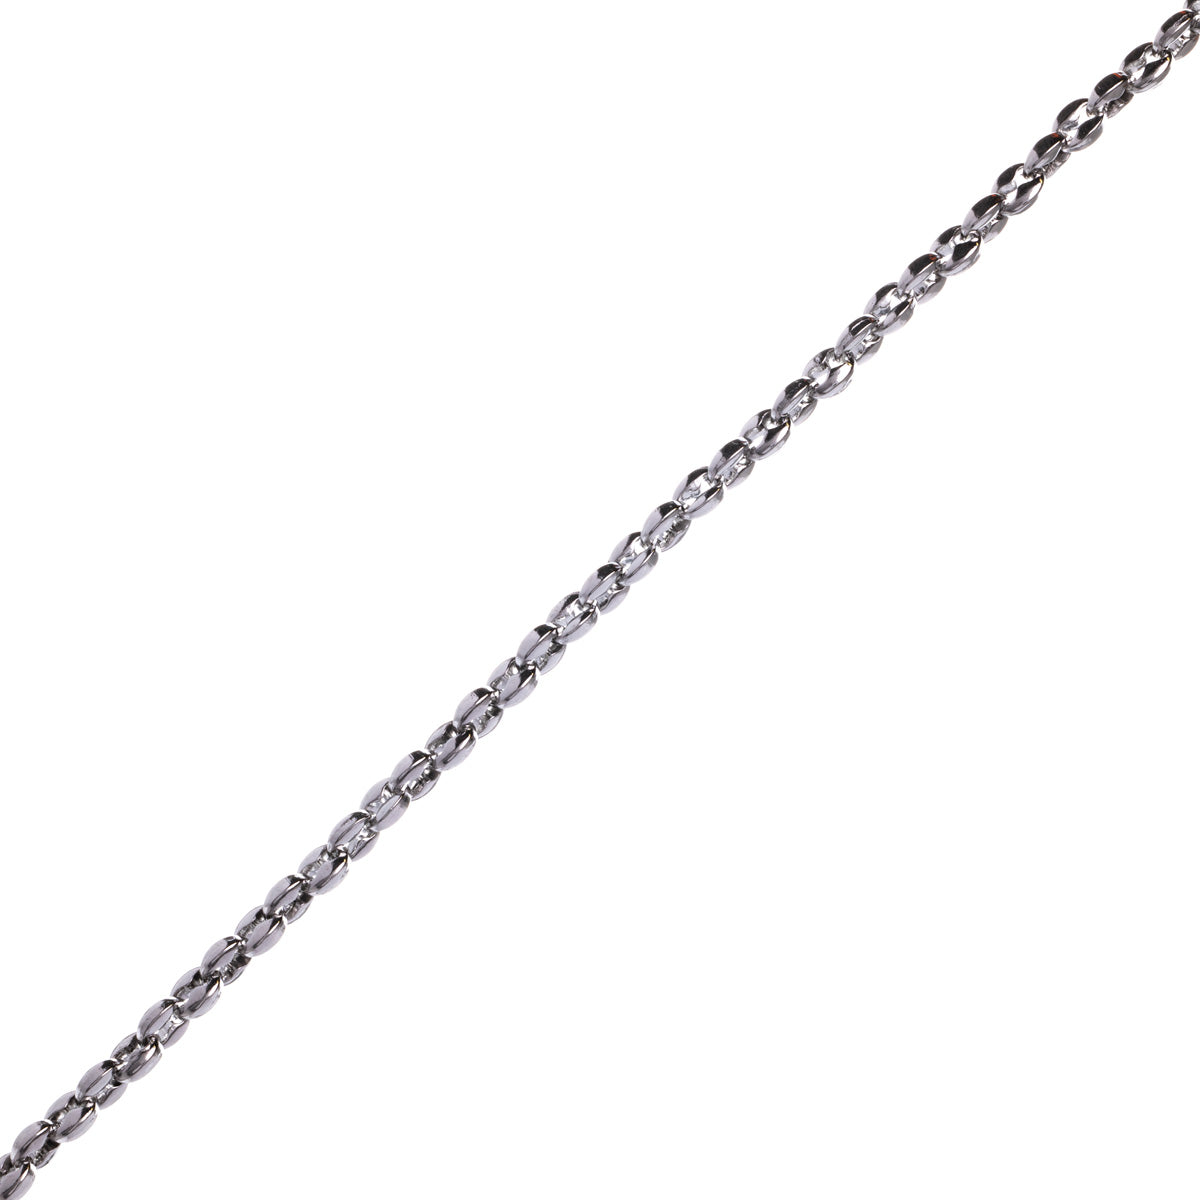 Thin steel neck chain anchor chain 4mm 54cm